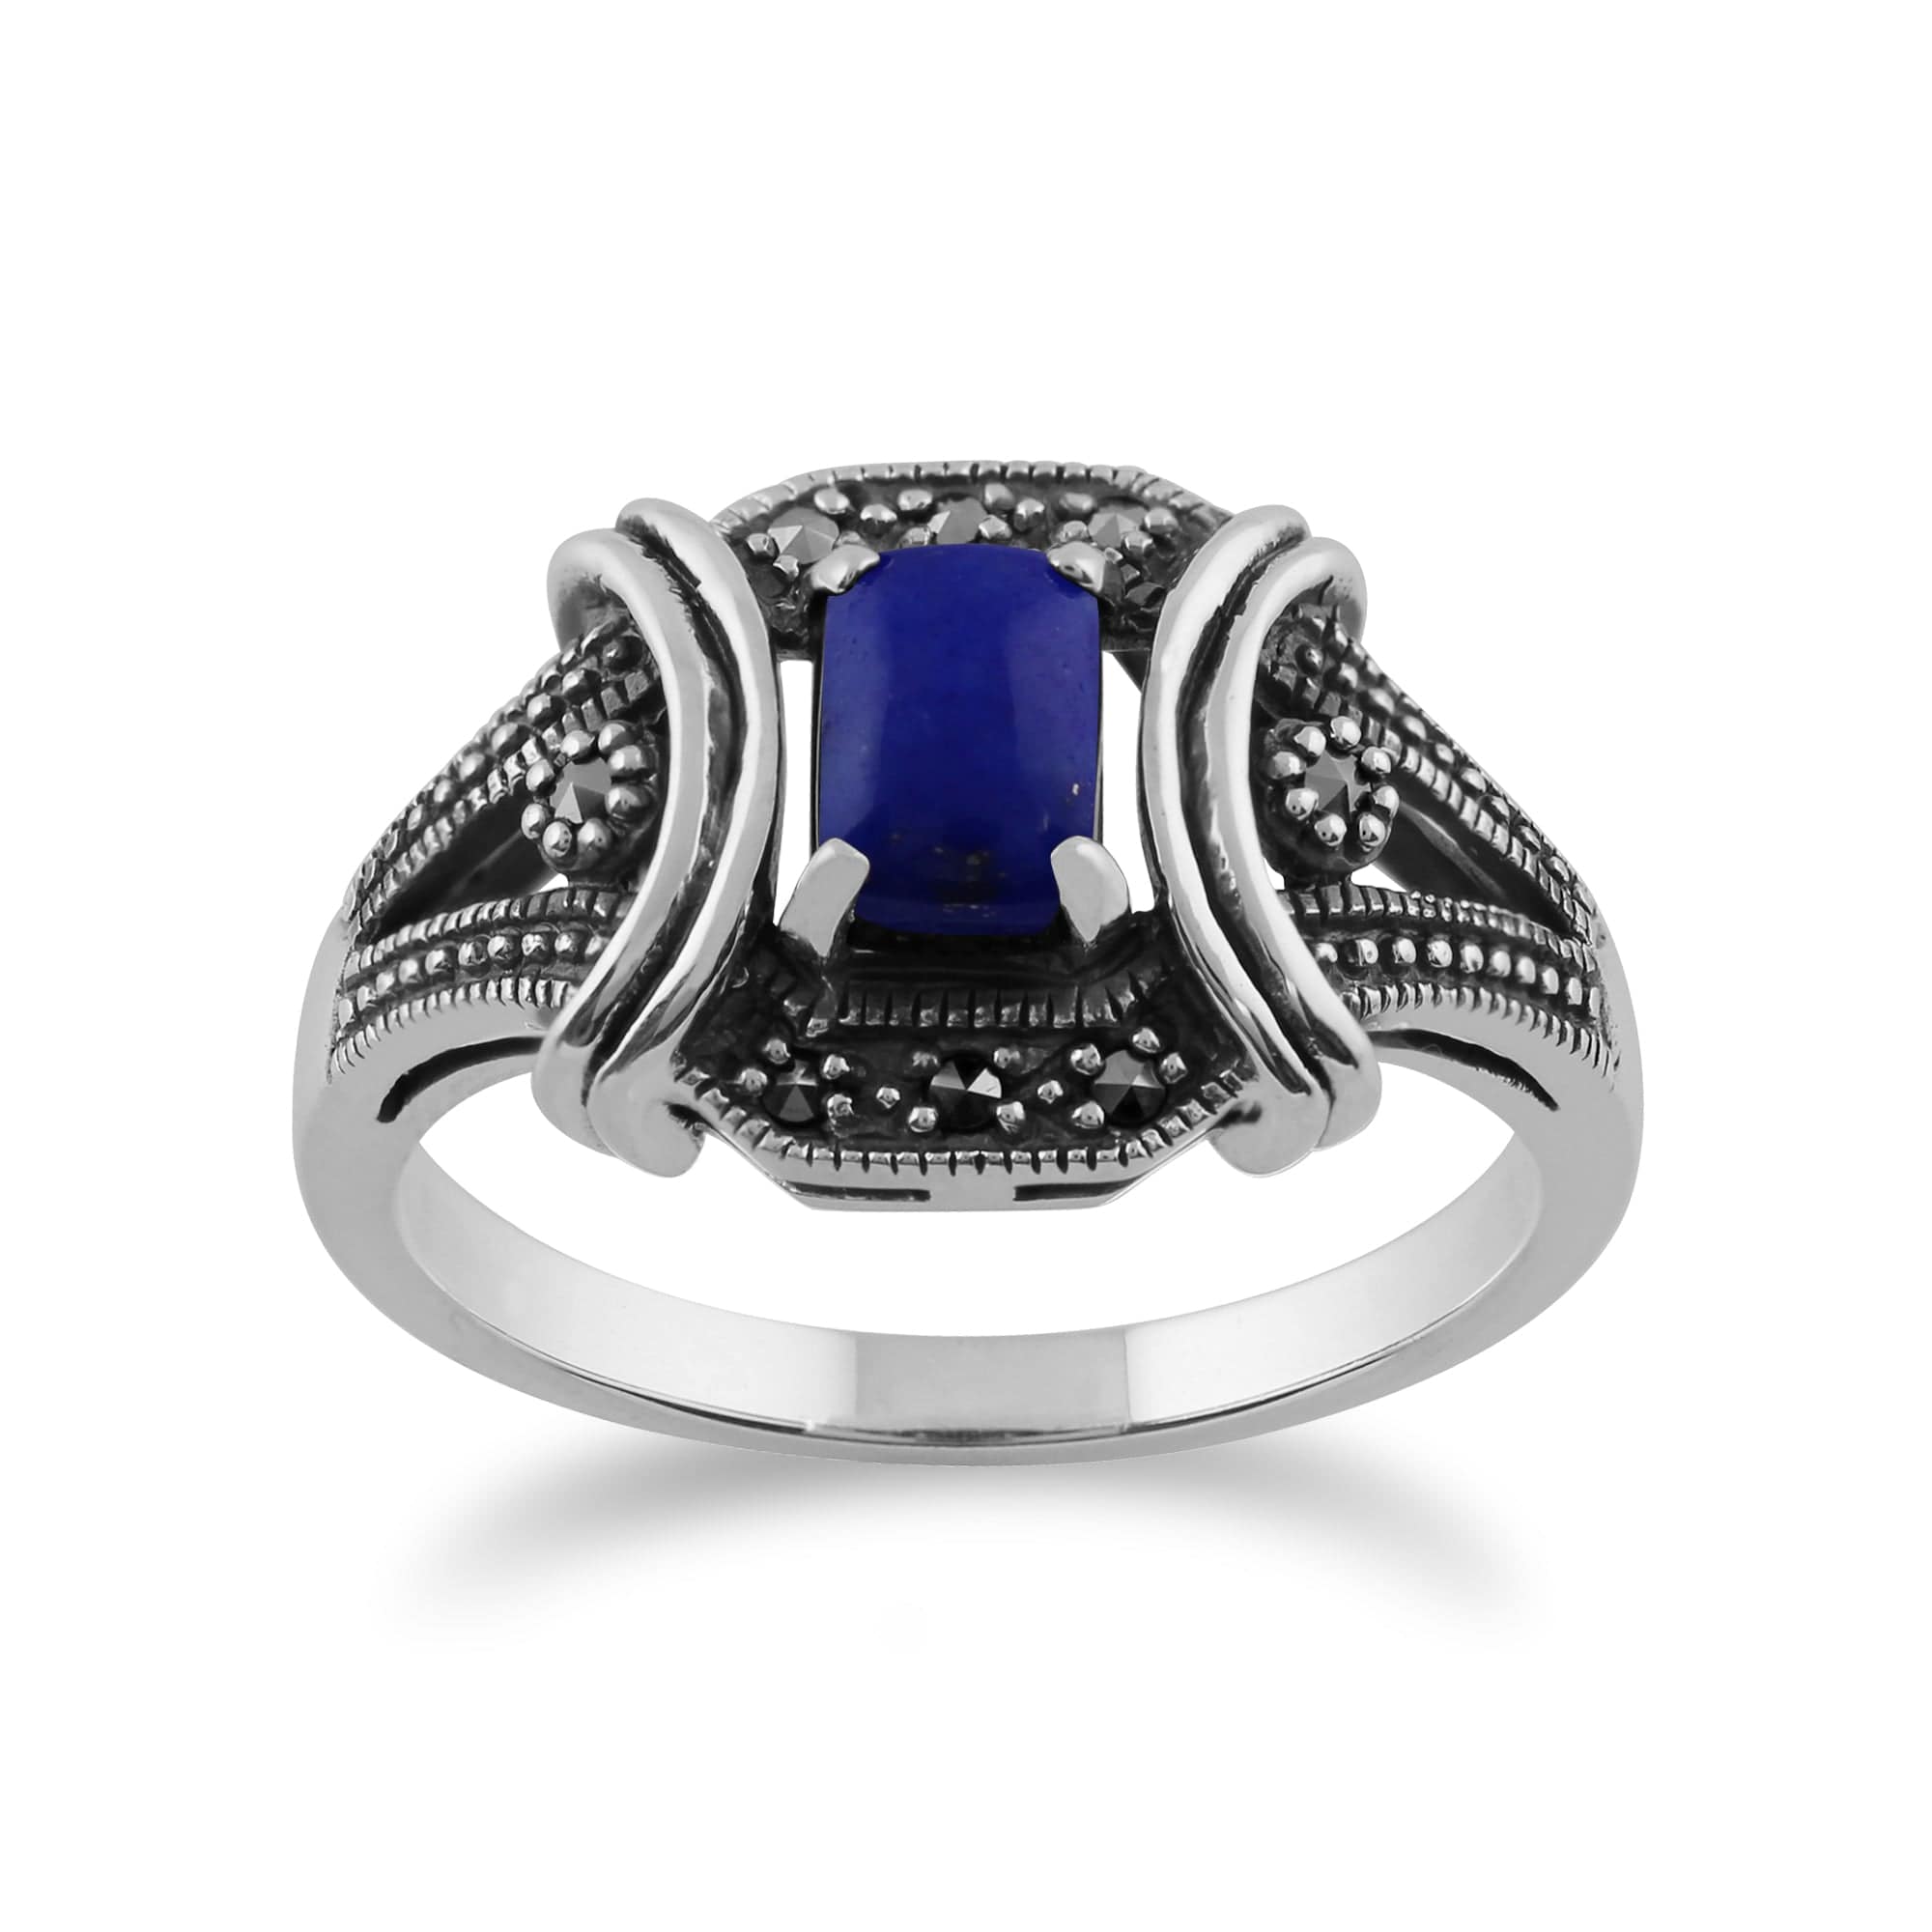 Gemondo 925 Sterling Silver 0.52ct Lapis Lazuli & Marcasite Art Deco Ring Image 1